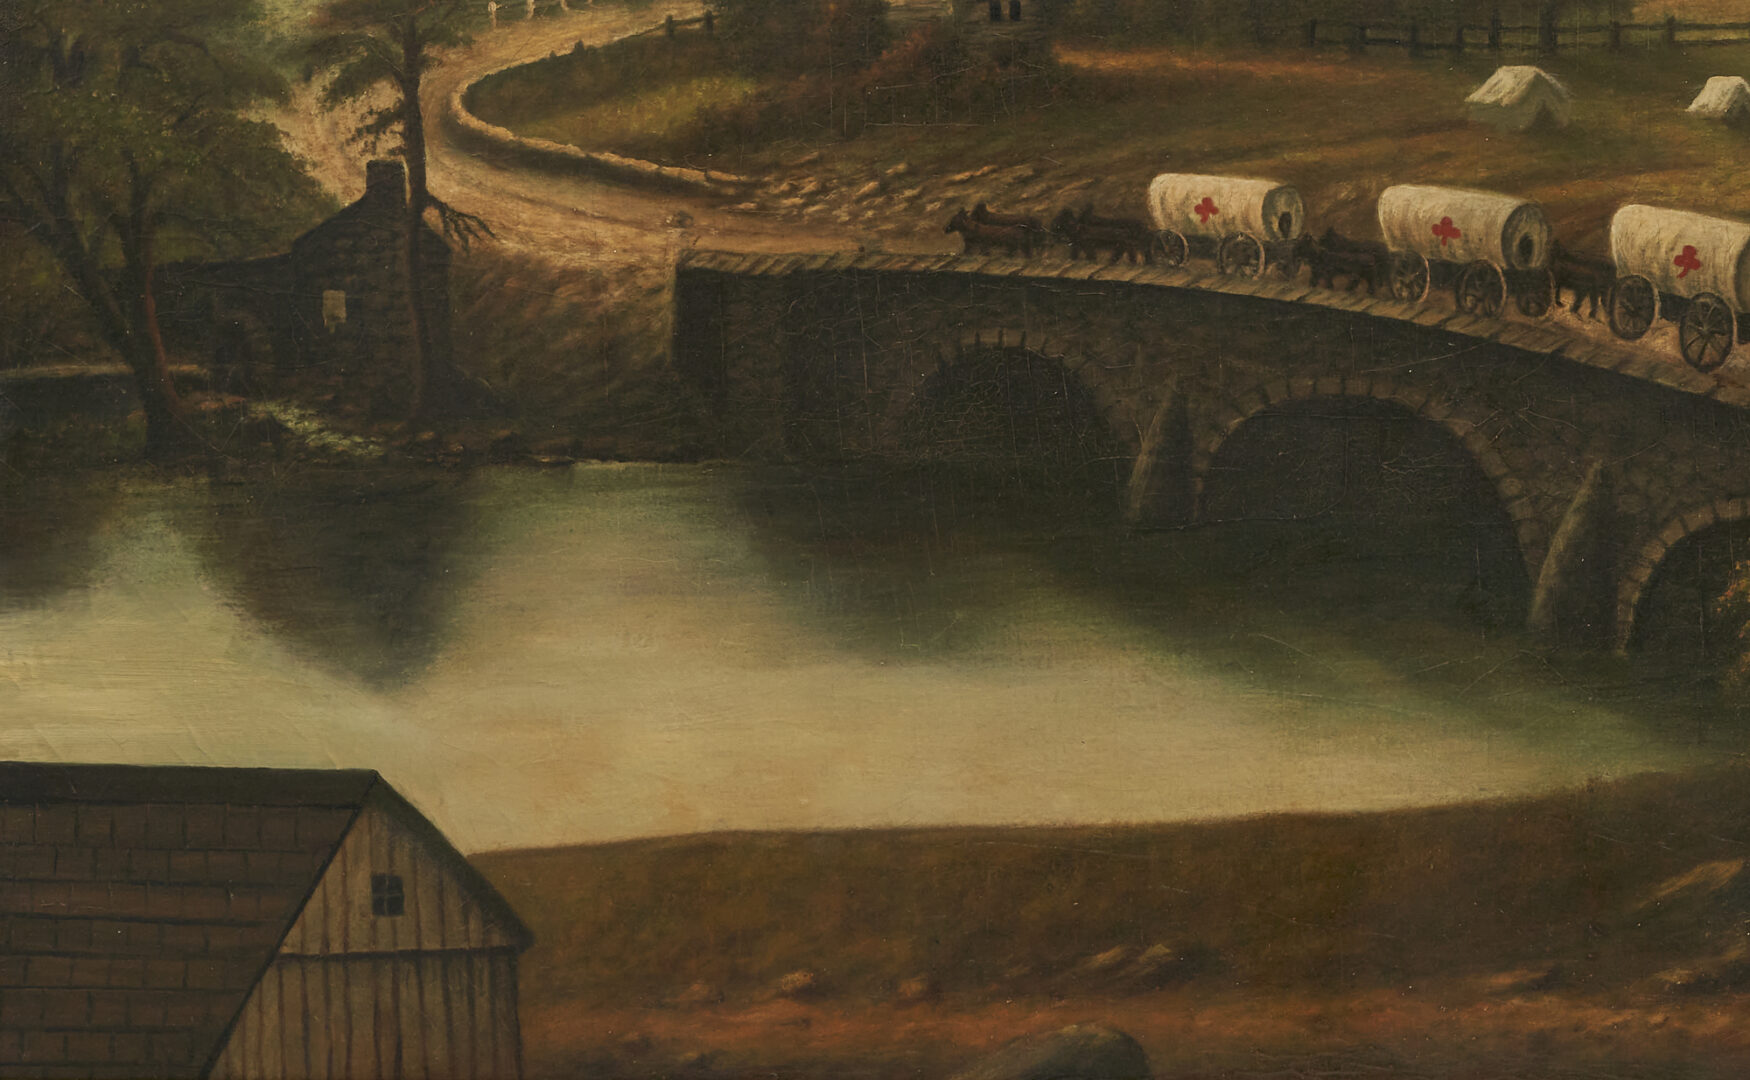 Lot 535: Theo Koeth O/C Civil War Painting, Middle Bridge at Antietam, 1862, after Gardner